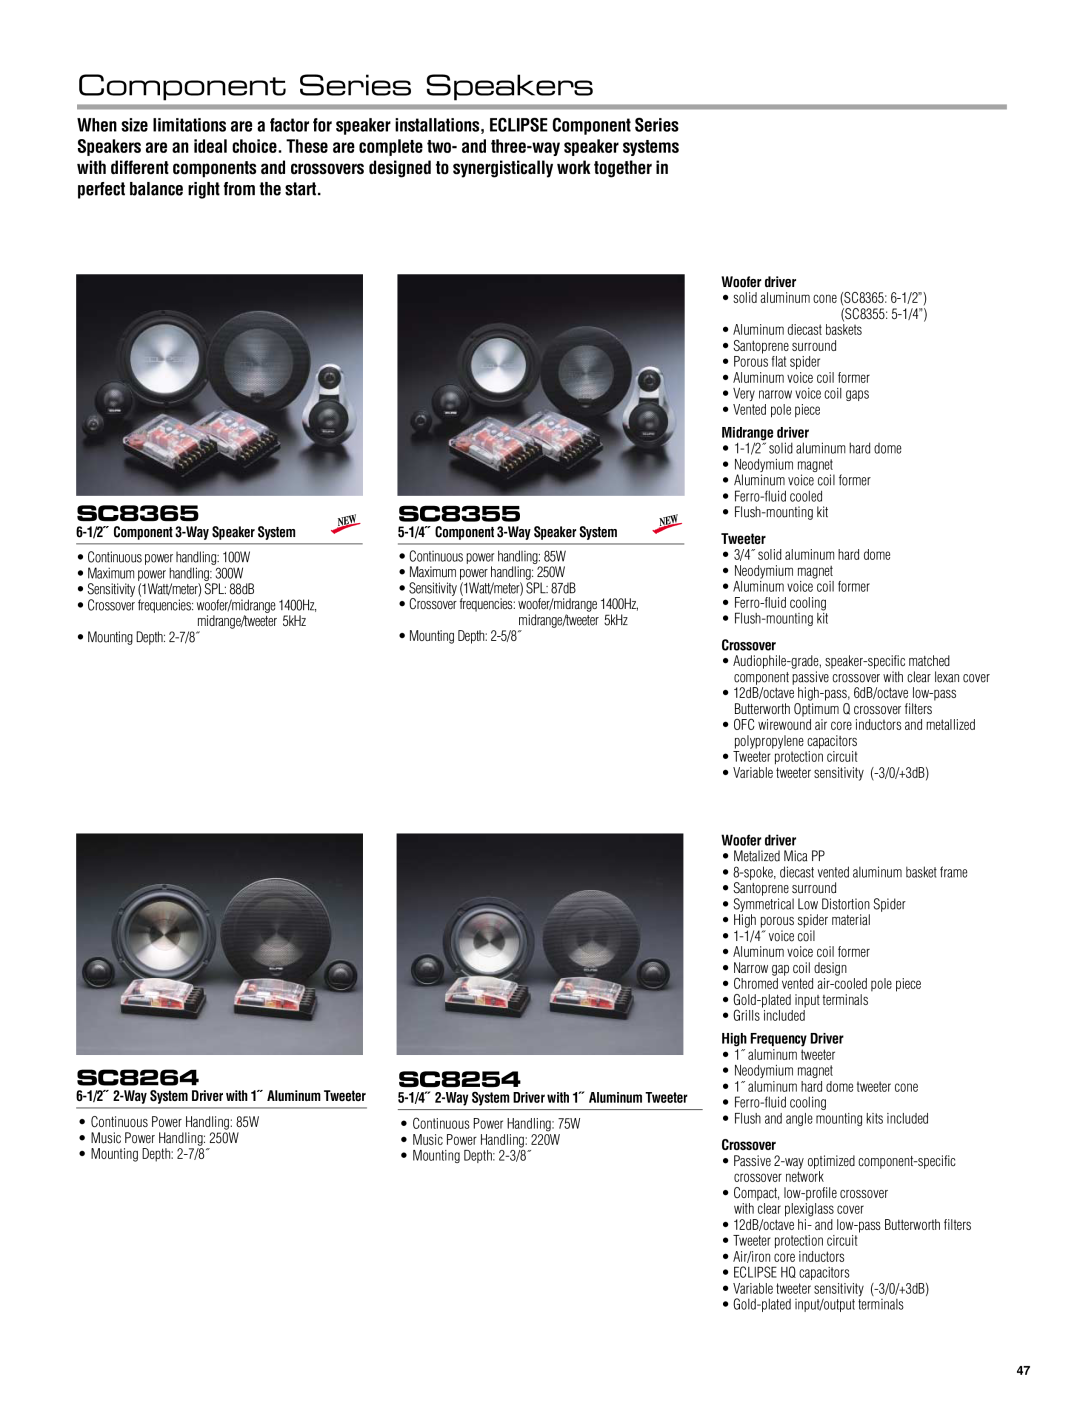 Eclipse - Fujitsu Ten TVR105 Component Series Speakers, SC8365, SC8264, SC8355, SC8254, Woofer driver, Midrange driver 